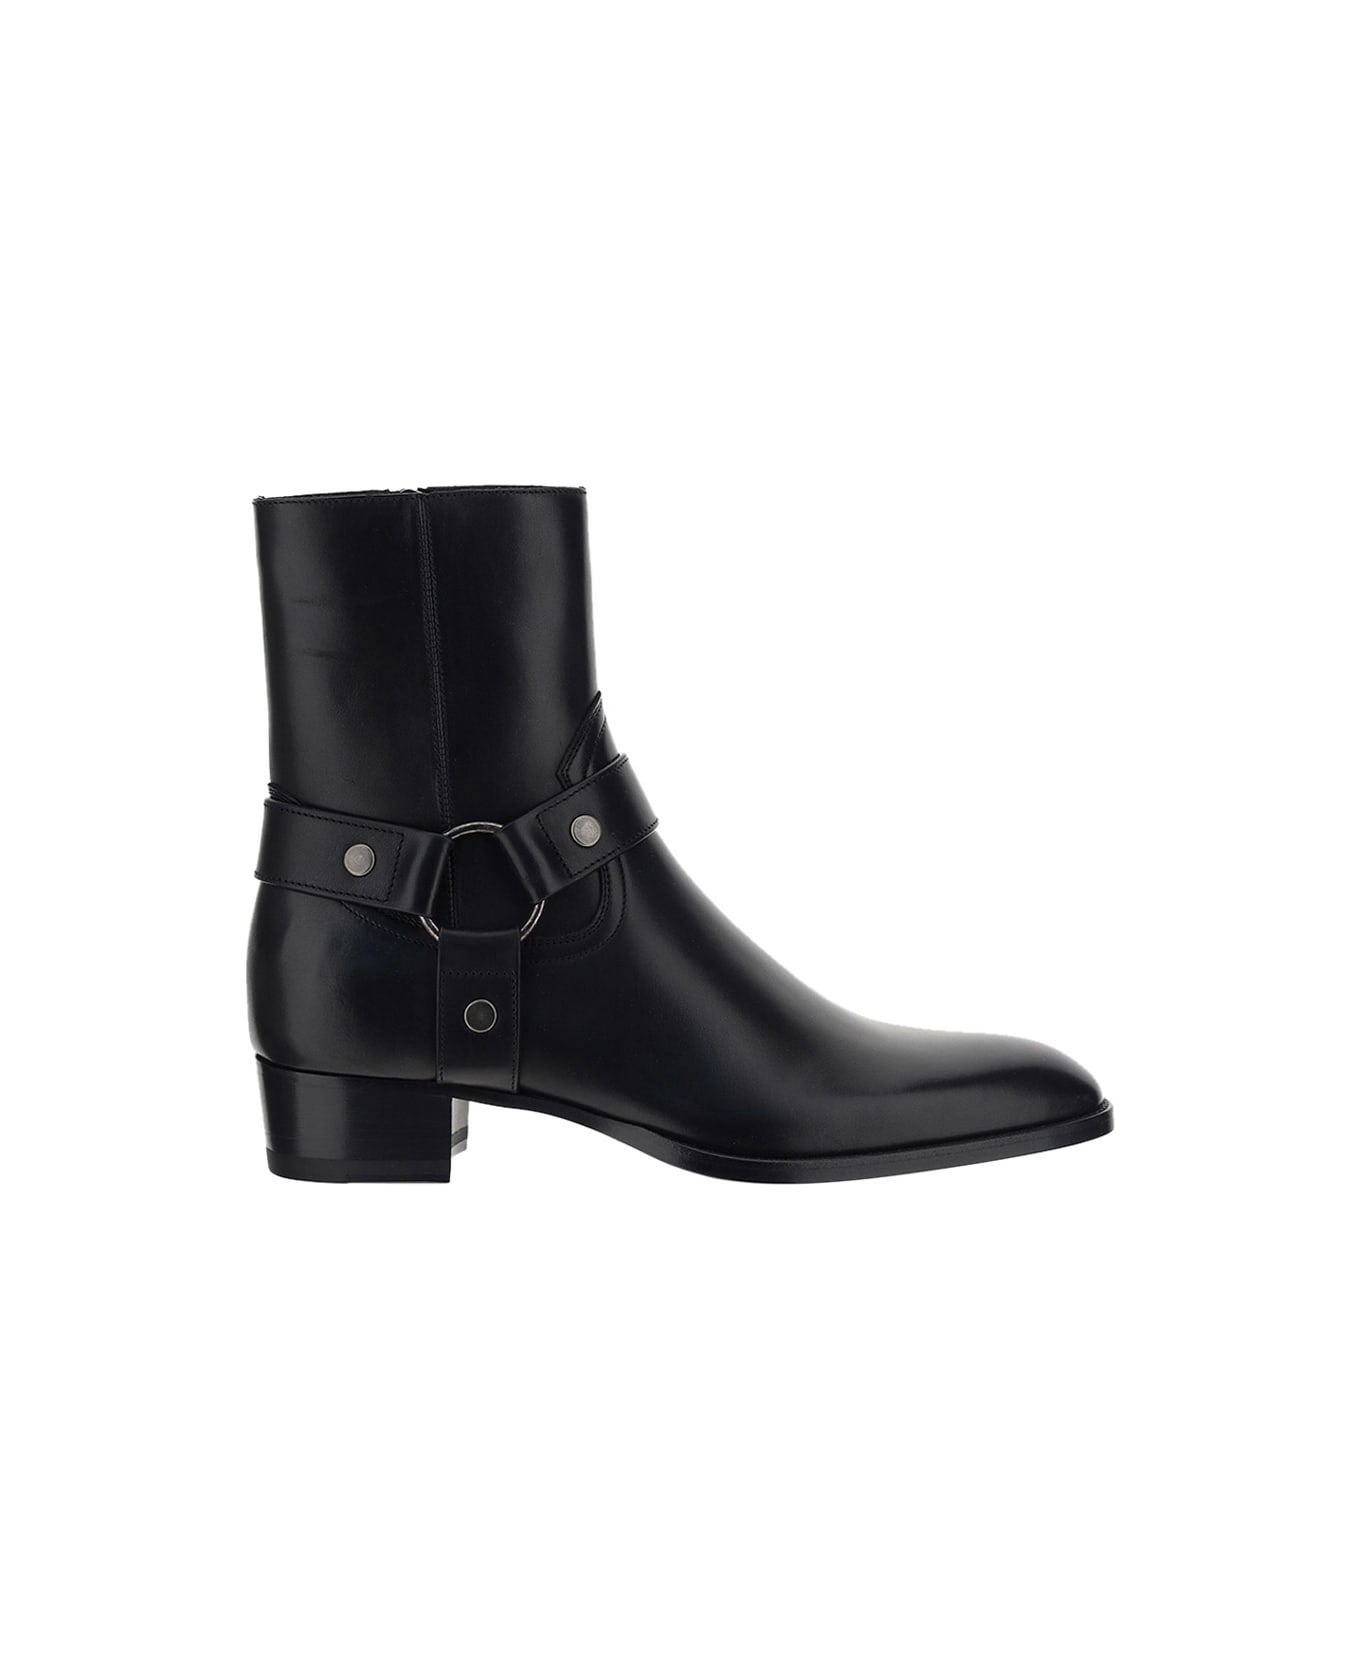 Saint Laurent Wyatt 40 Harness Boots - Black